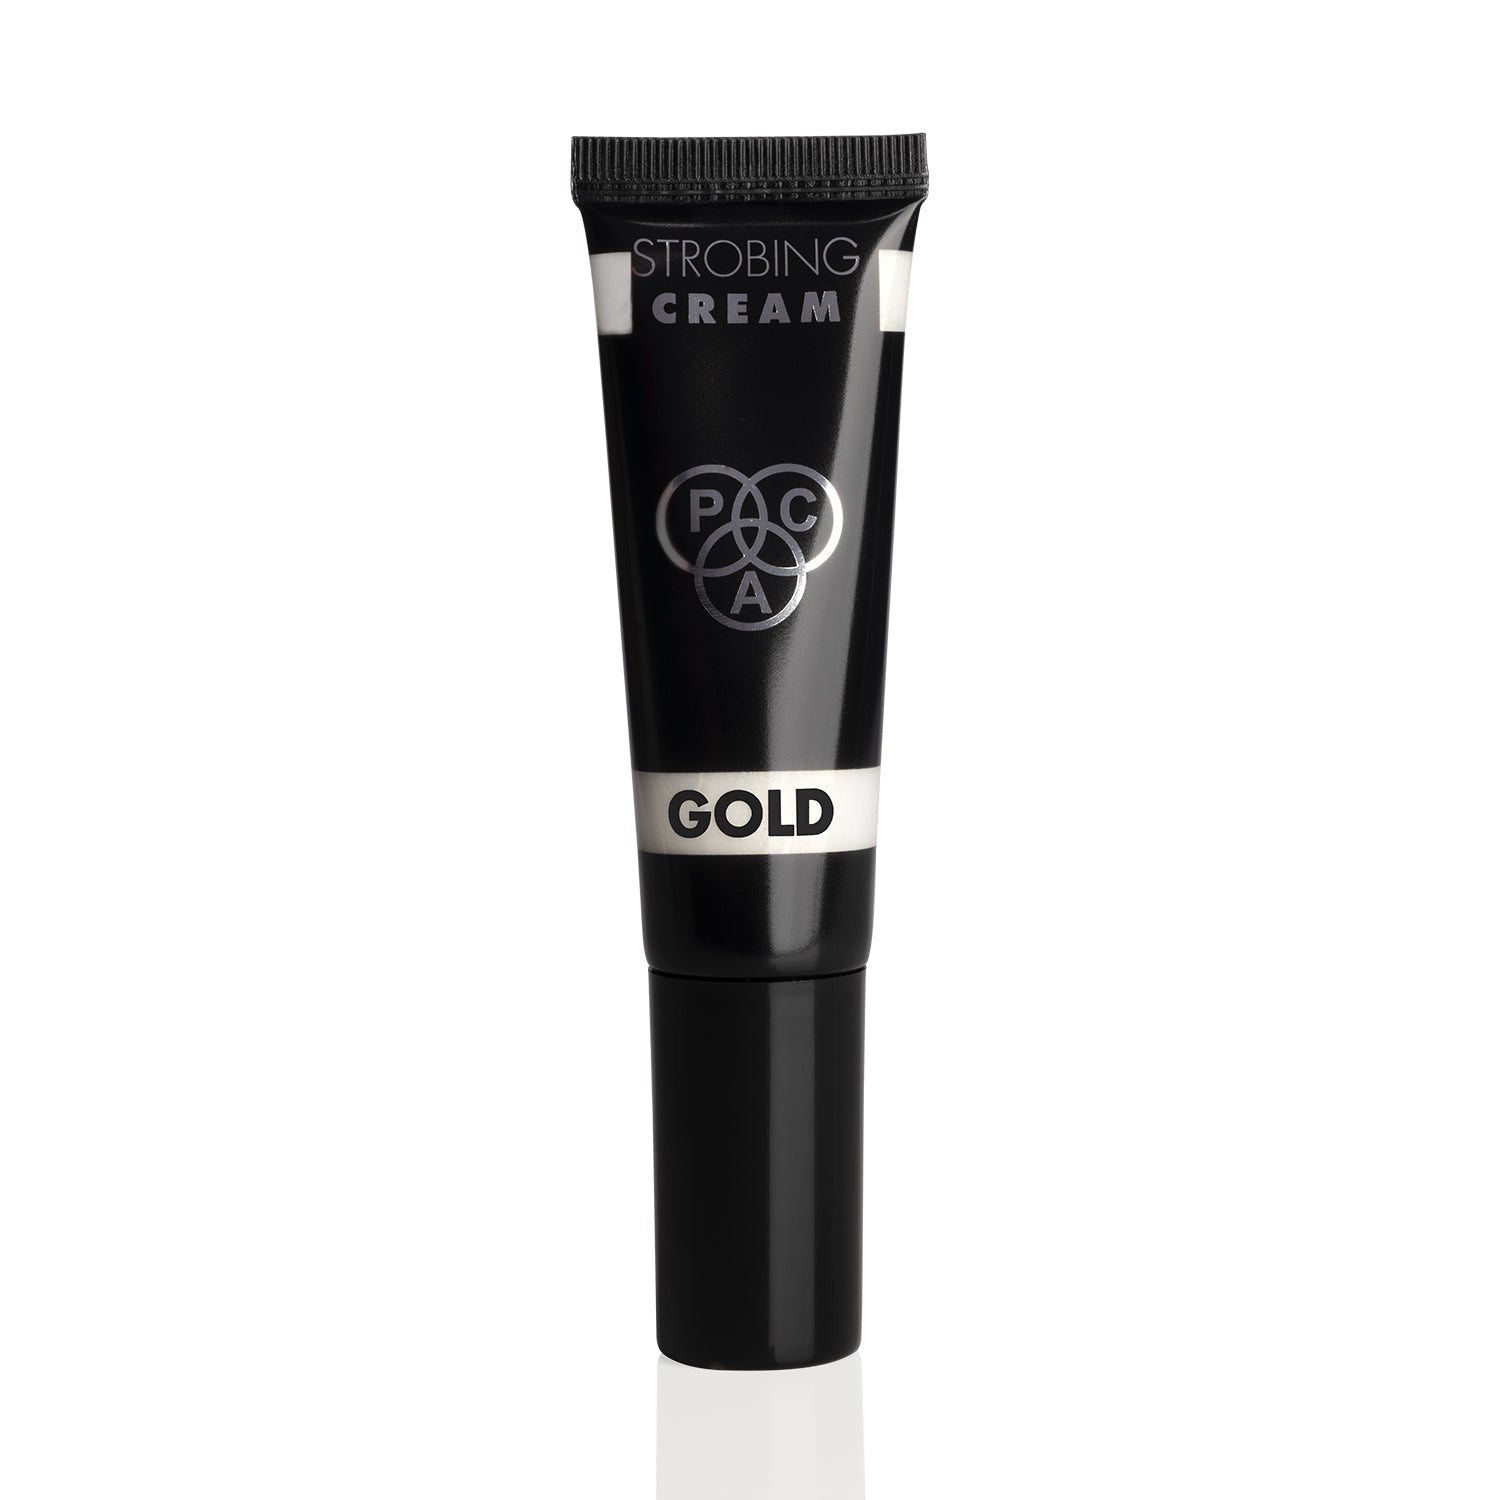 PAC Cosmetics Strobing Cream #Size_30 ml+#Color_Gold